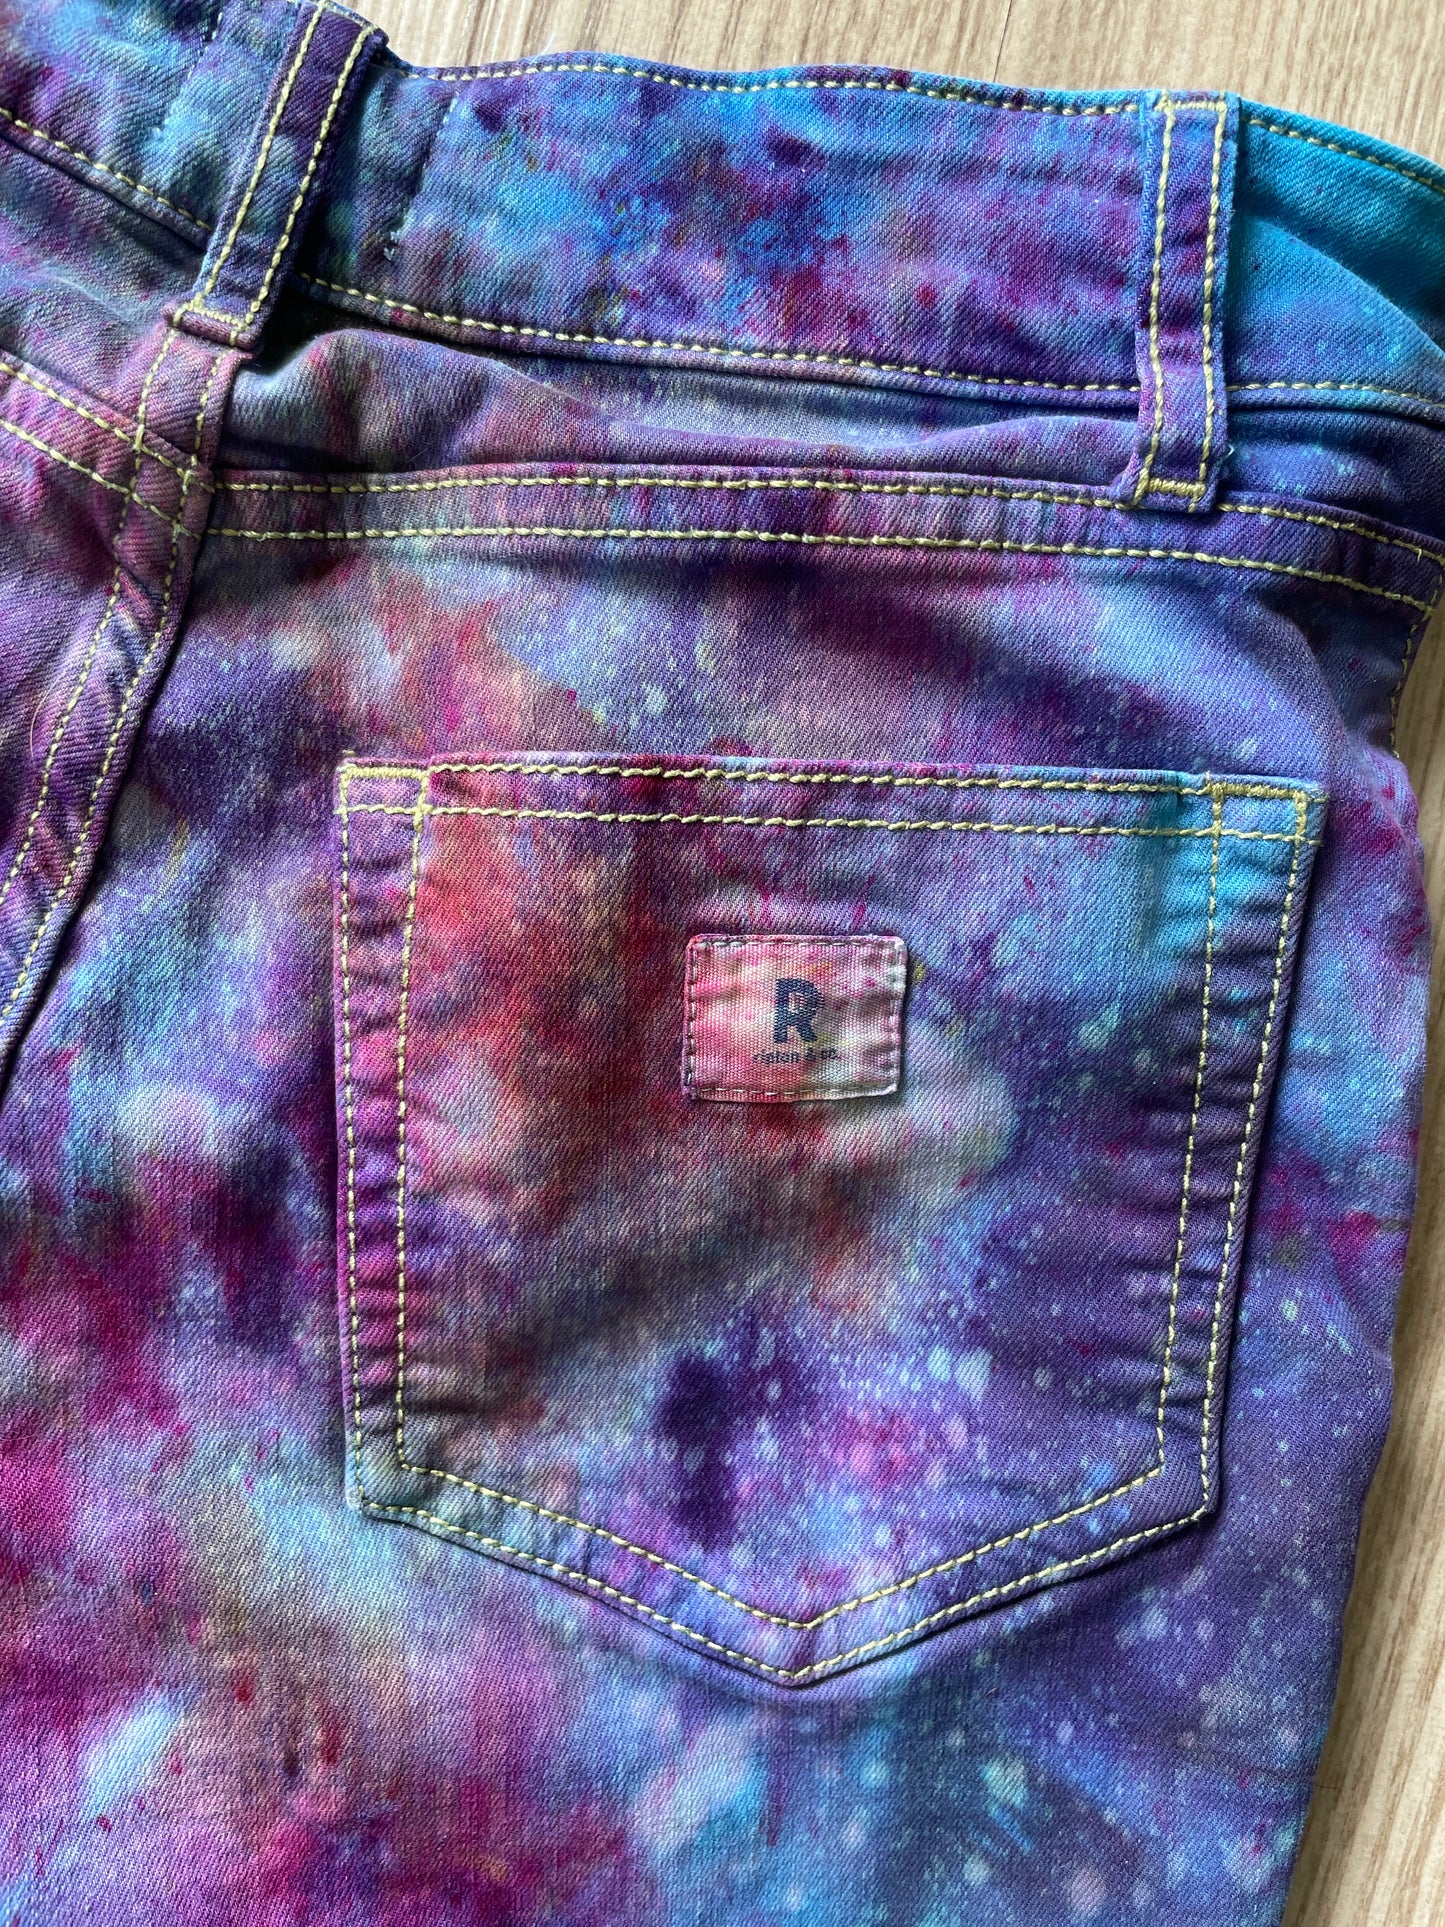 Women's Size 26 Ripton Galaxy Dye Cutoff Jorts | Blue Galaxy Ice Dye Tie Dye Shorts with Handprinted Graphics